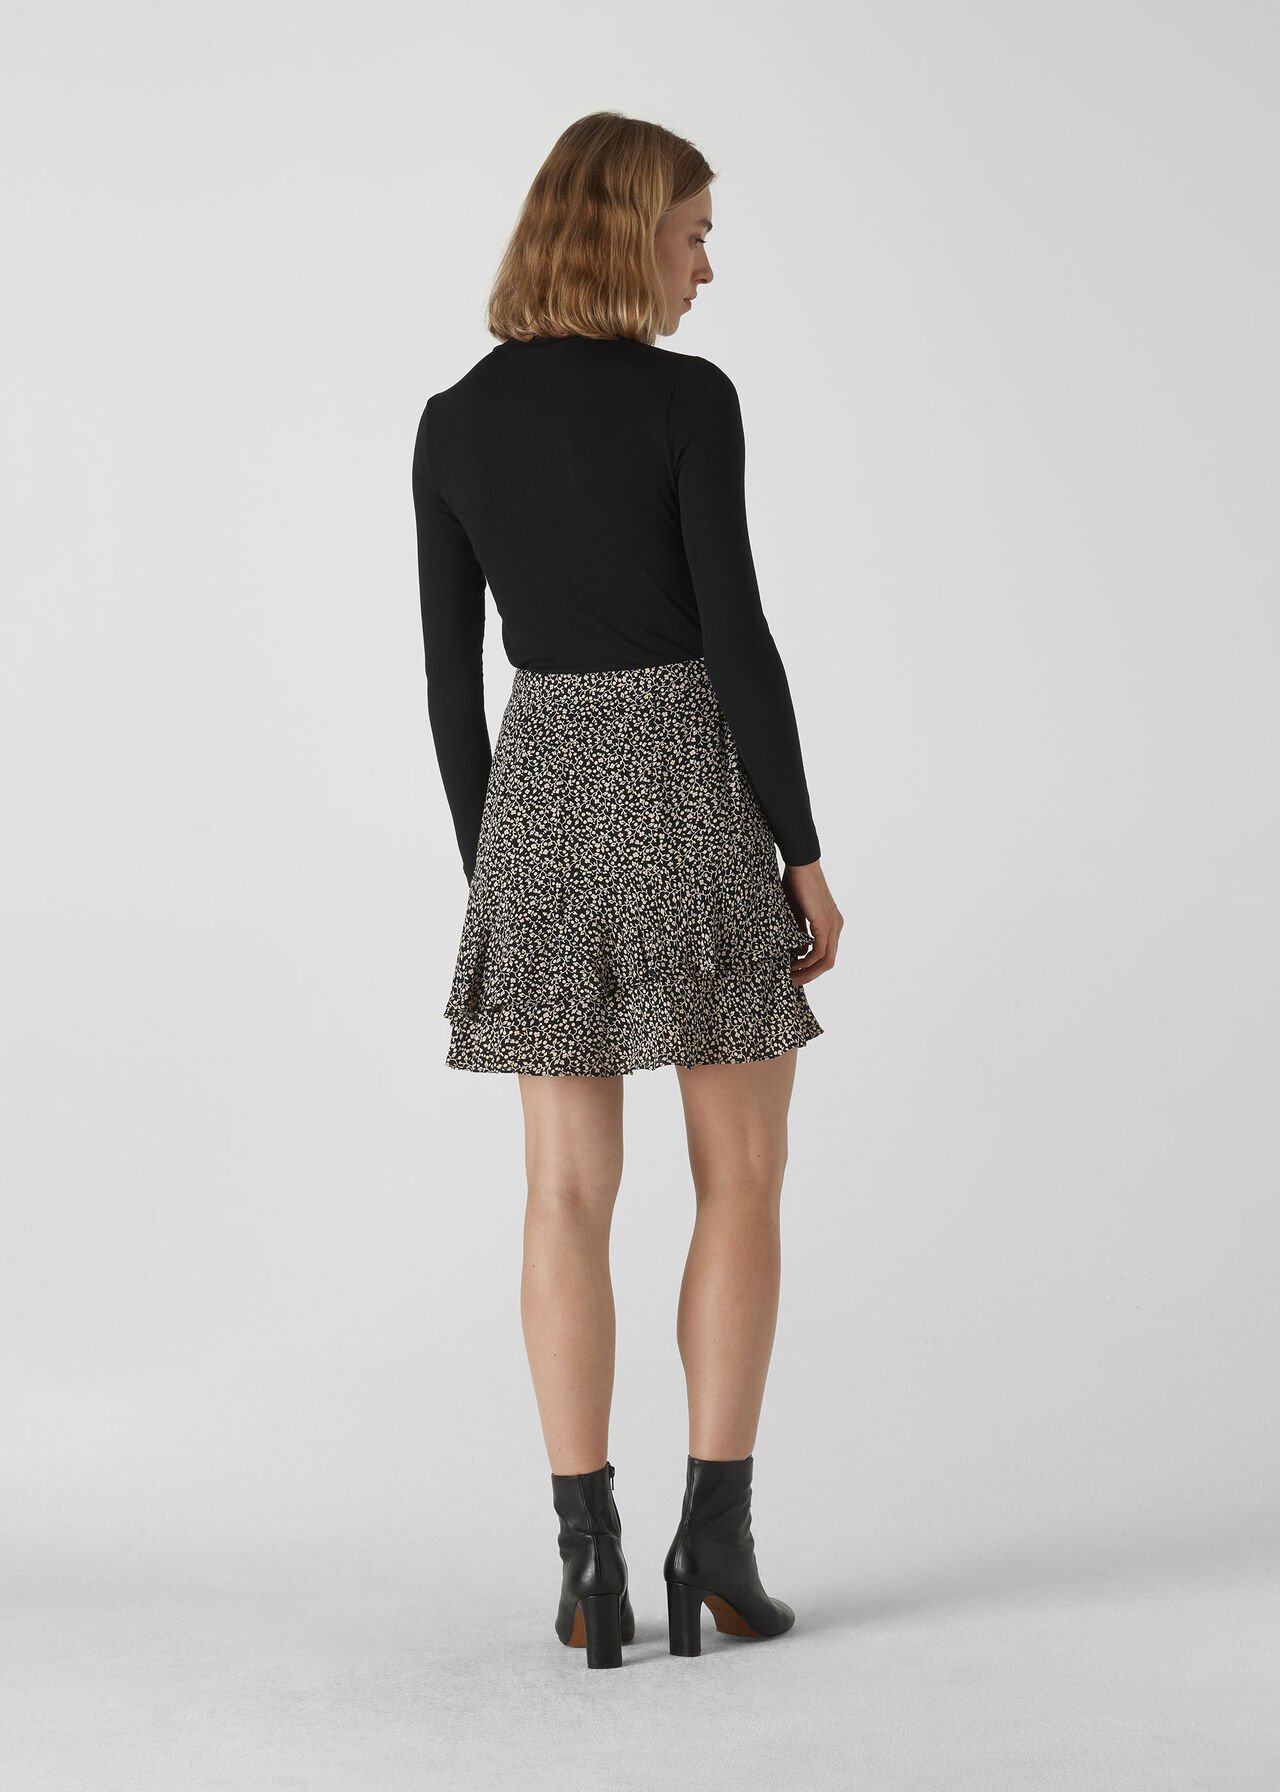 Autumn Floral Print Skirt Black/Multi